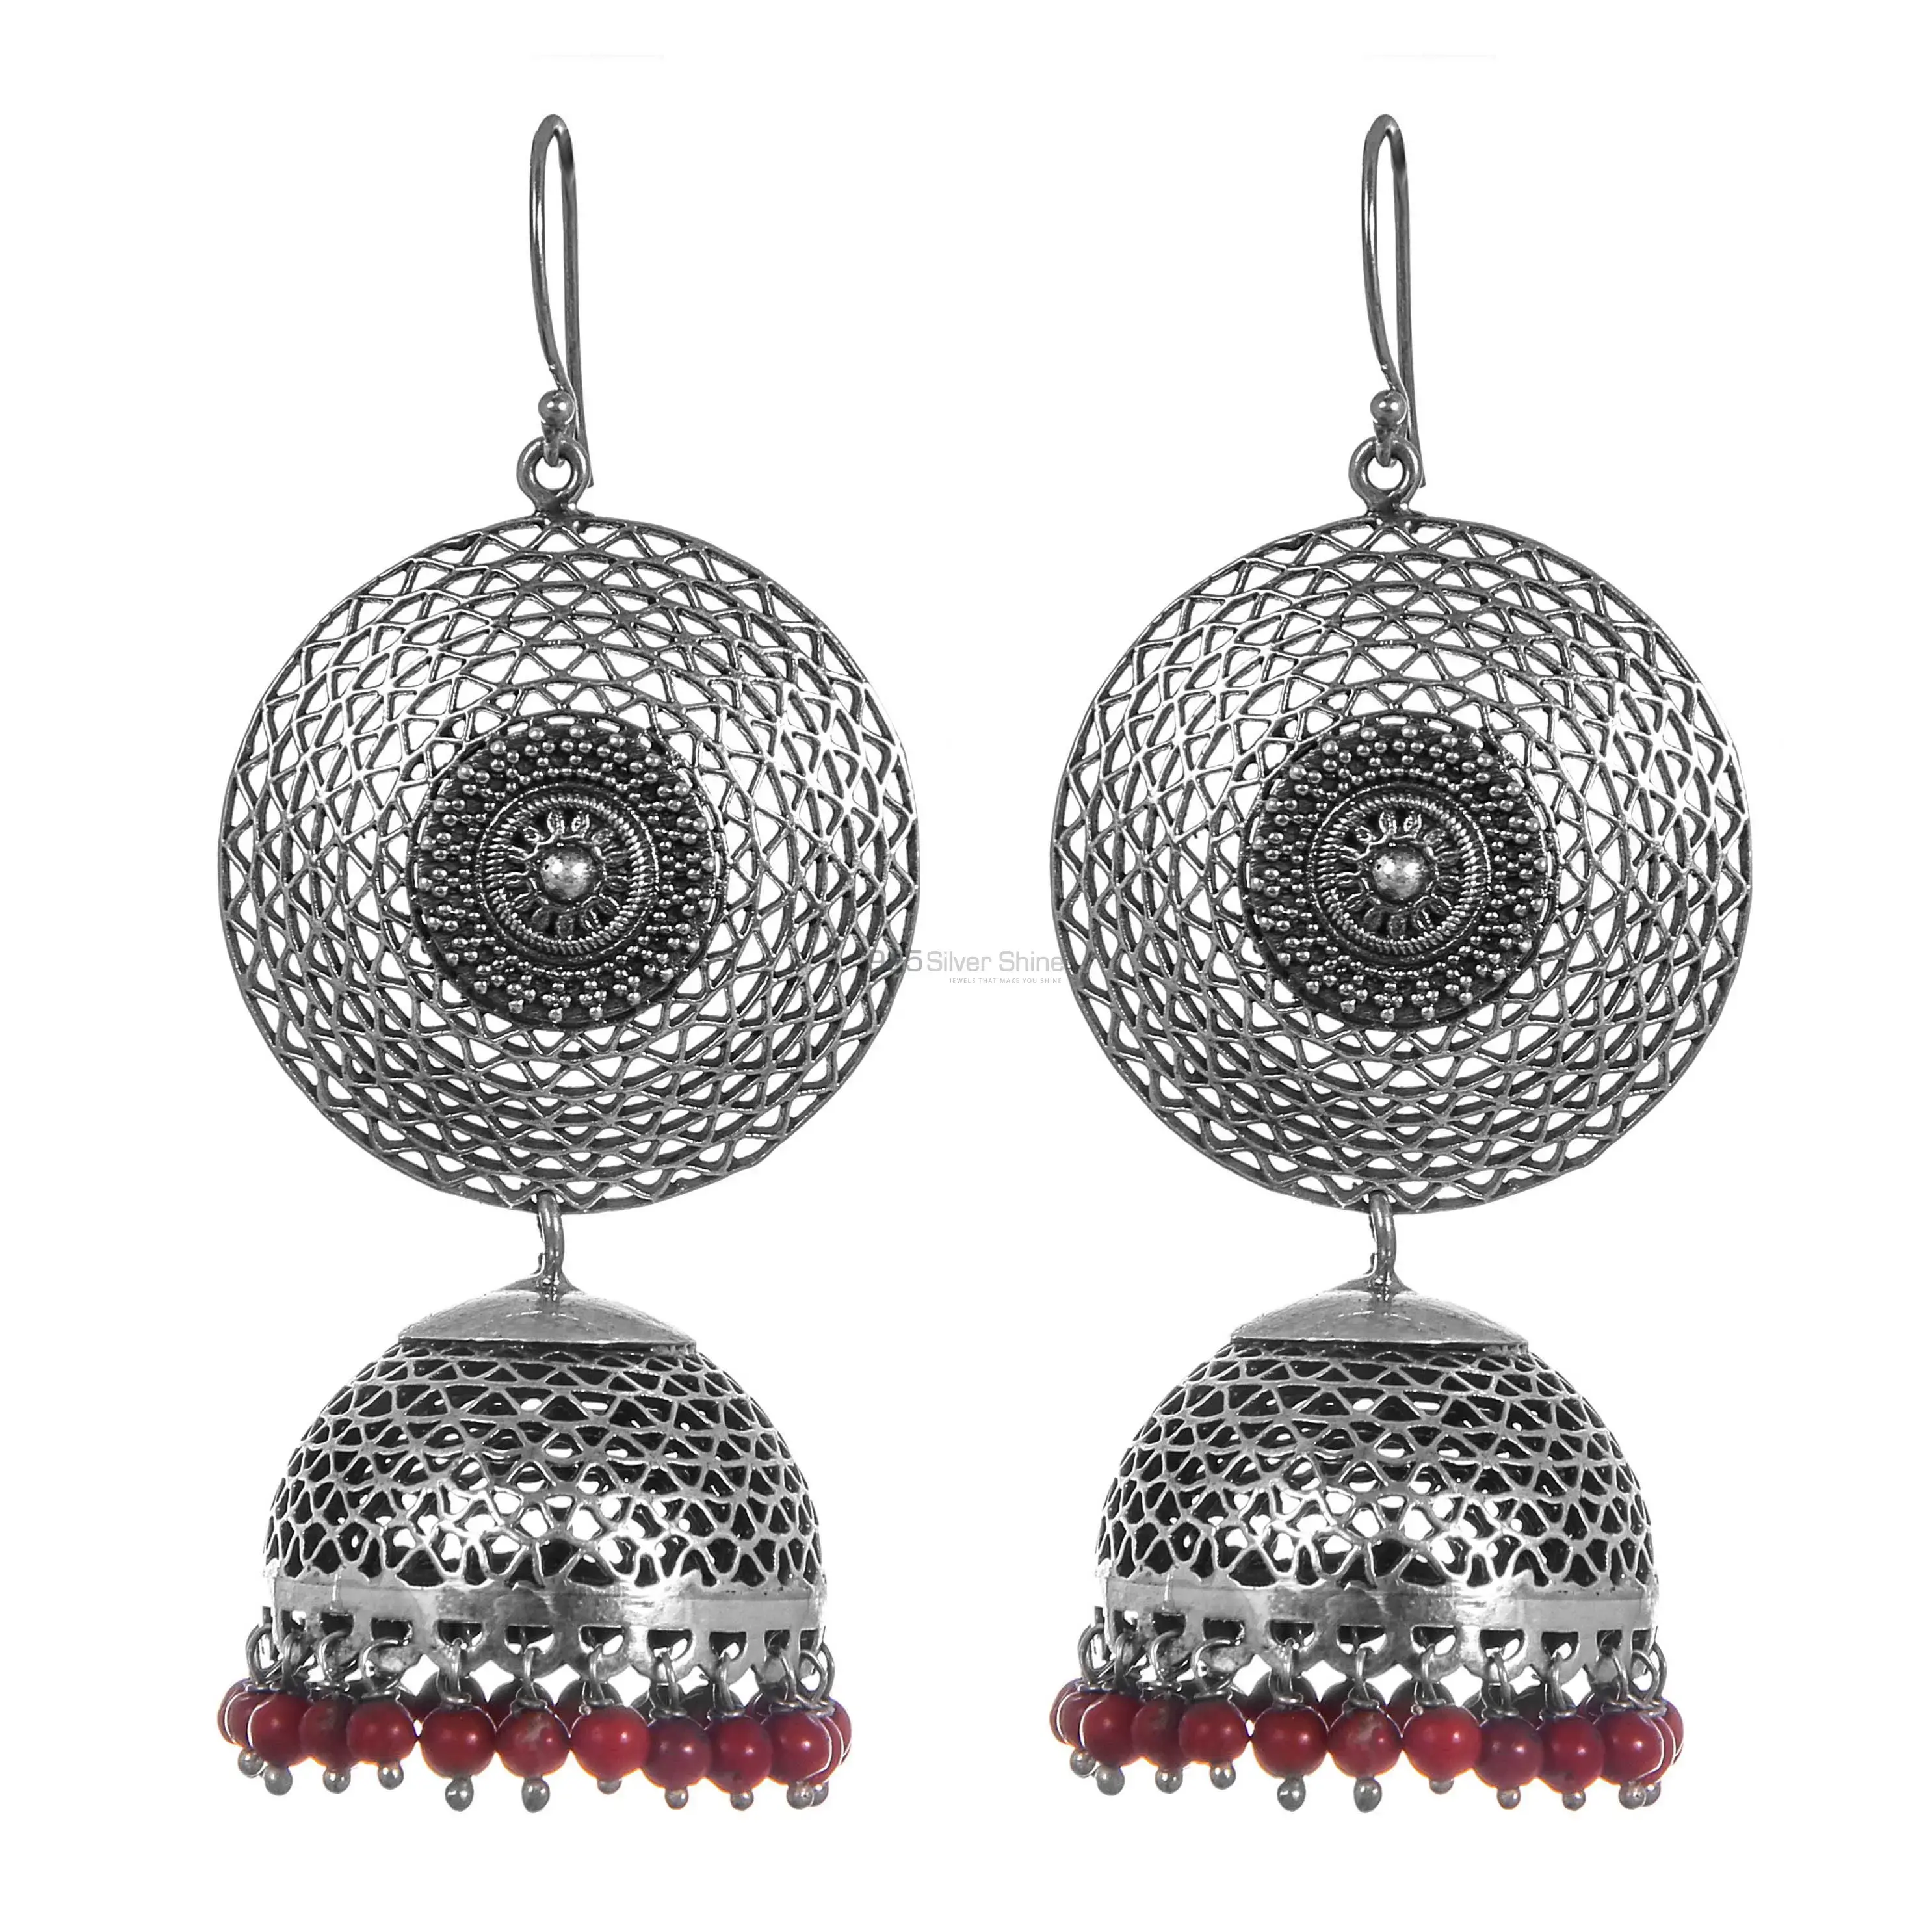 Best Design 925 Sterling Silver Handmade Earrings Manufacturer In Coral Gemstone Jewelry 925SE279